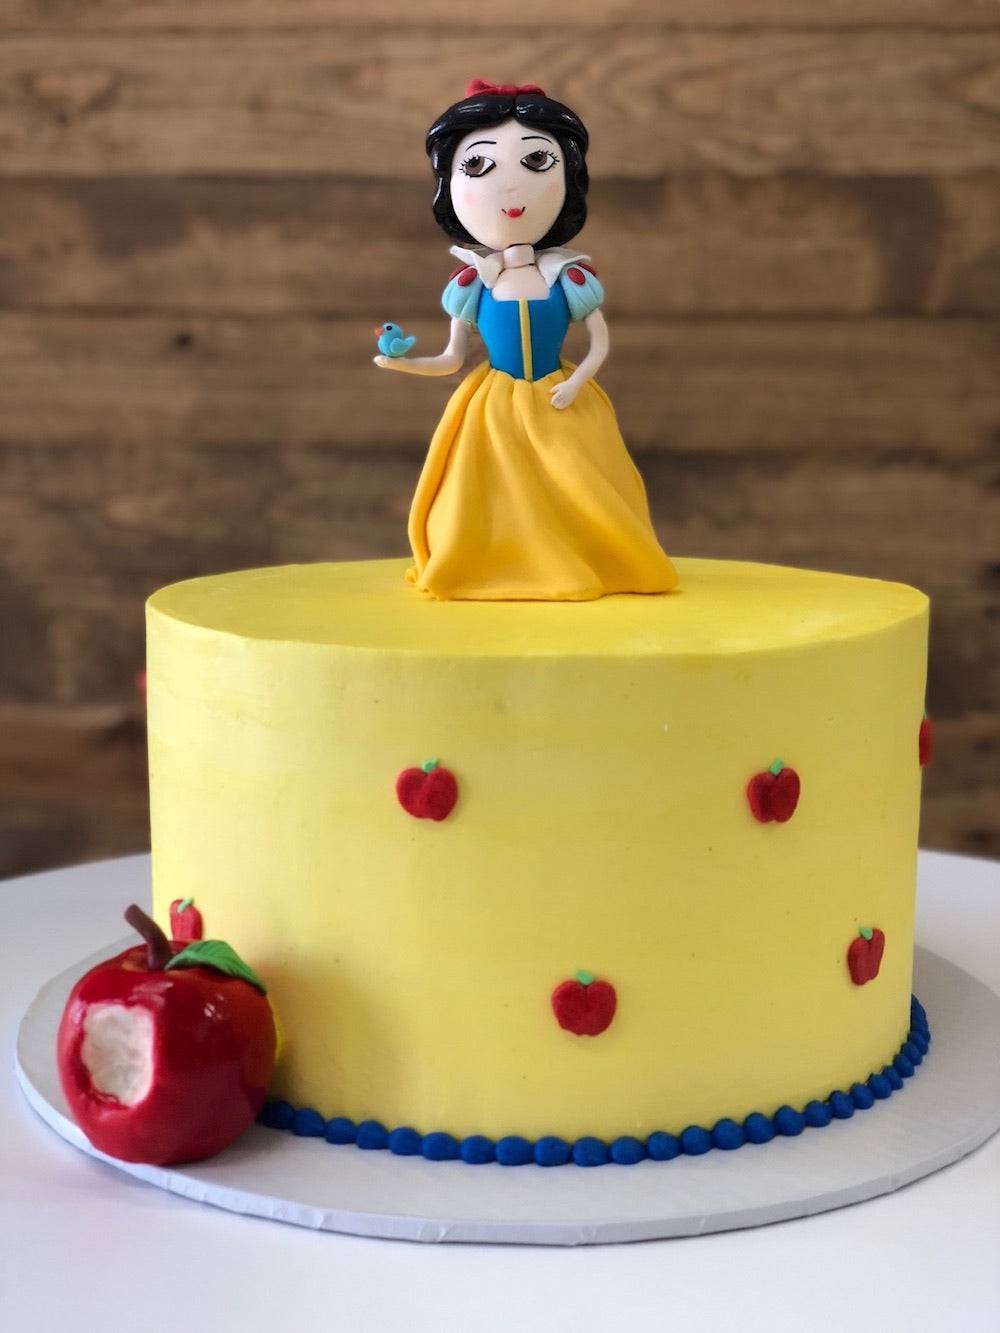 Snow White Cake - Sweet E's Bake Shop